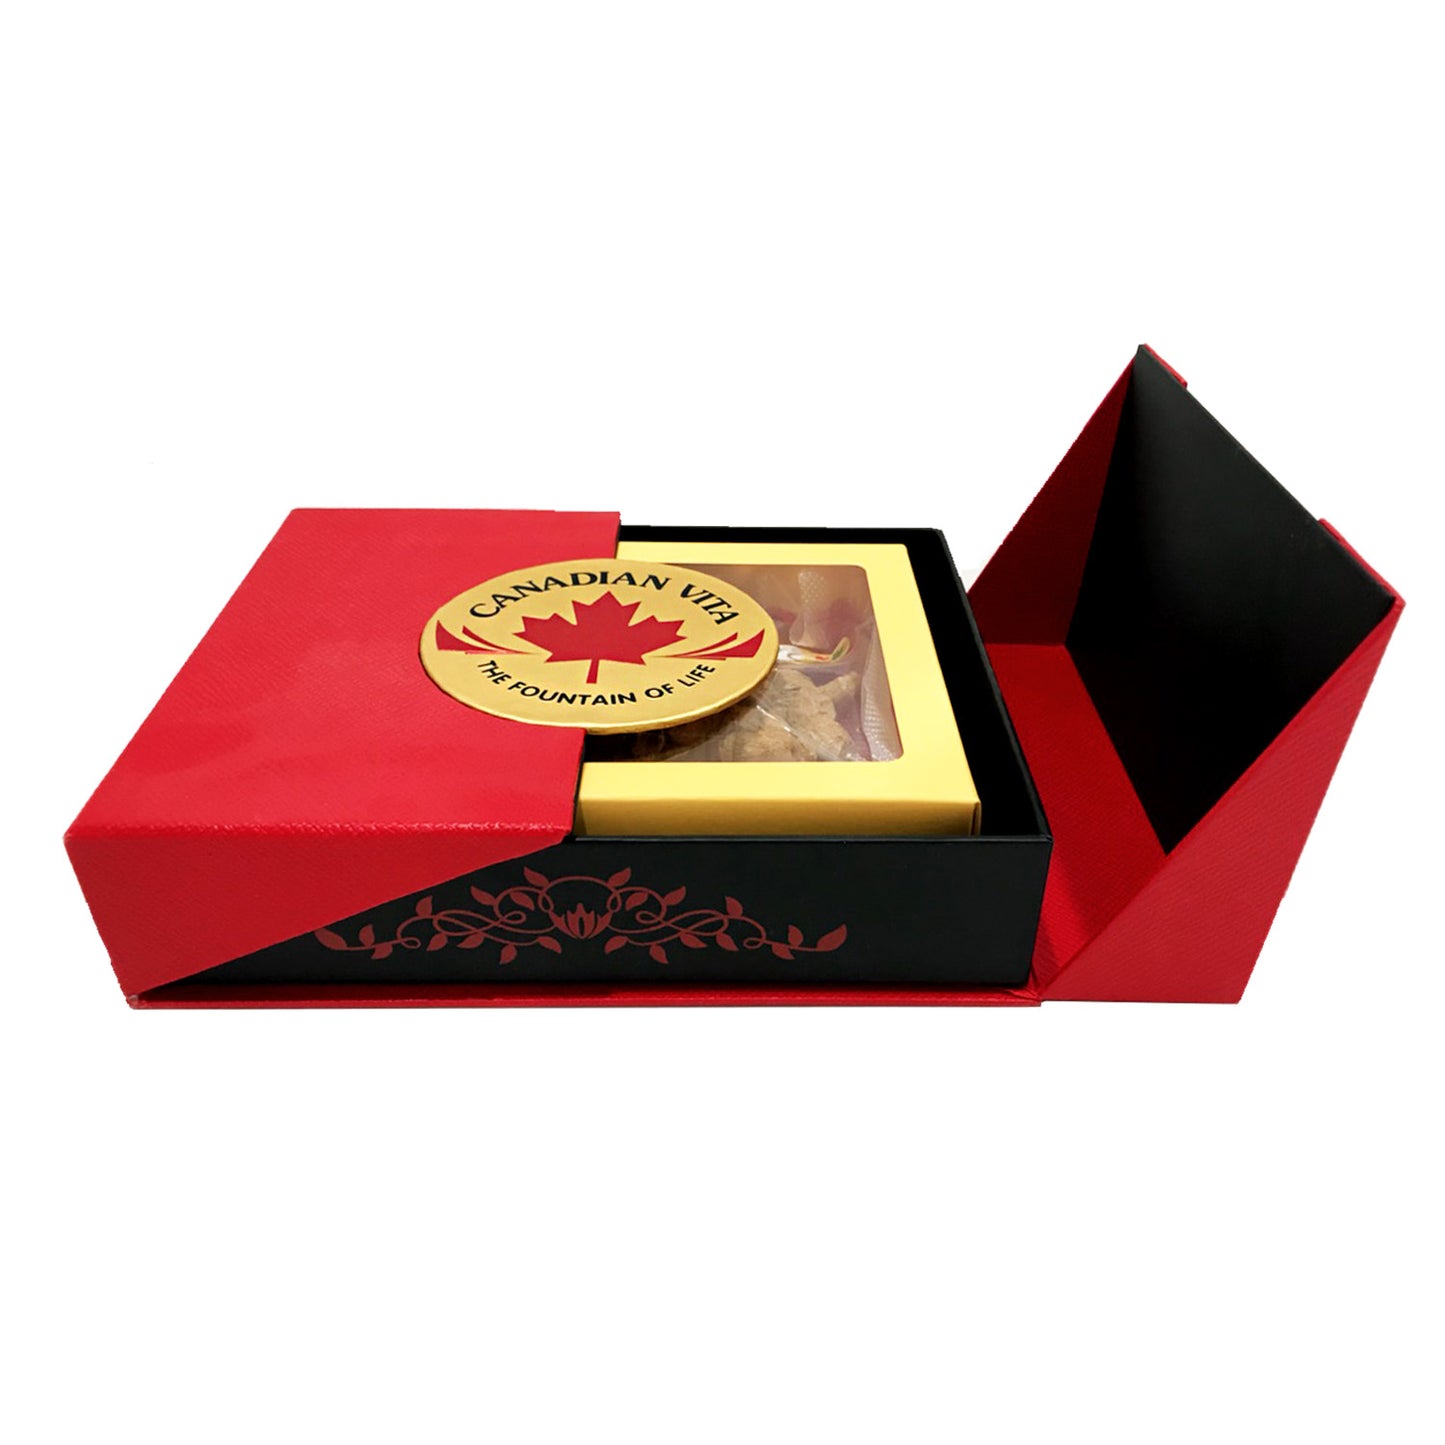 Canadian Vita Premium Ginseng Box (5 year - 200g)